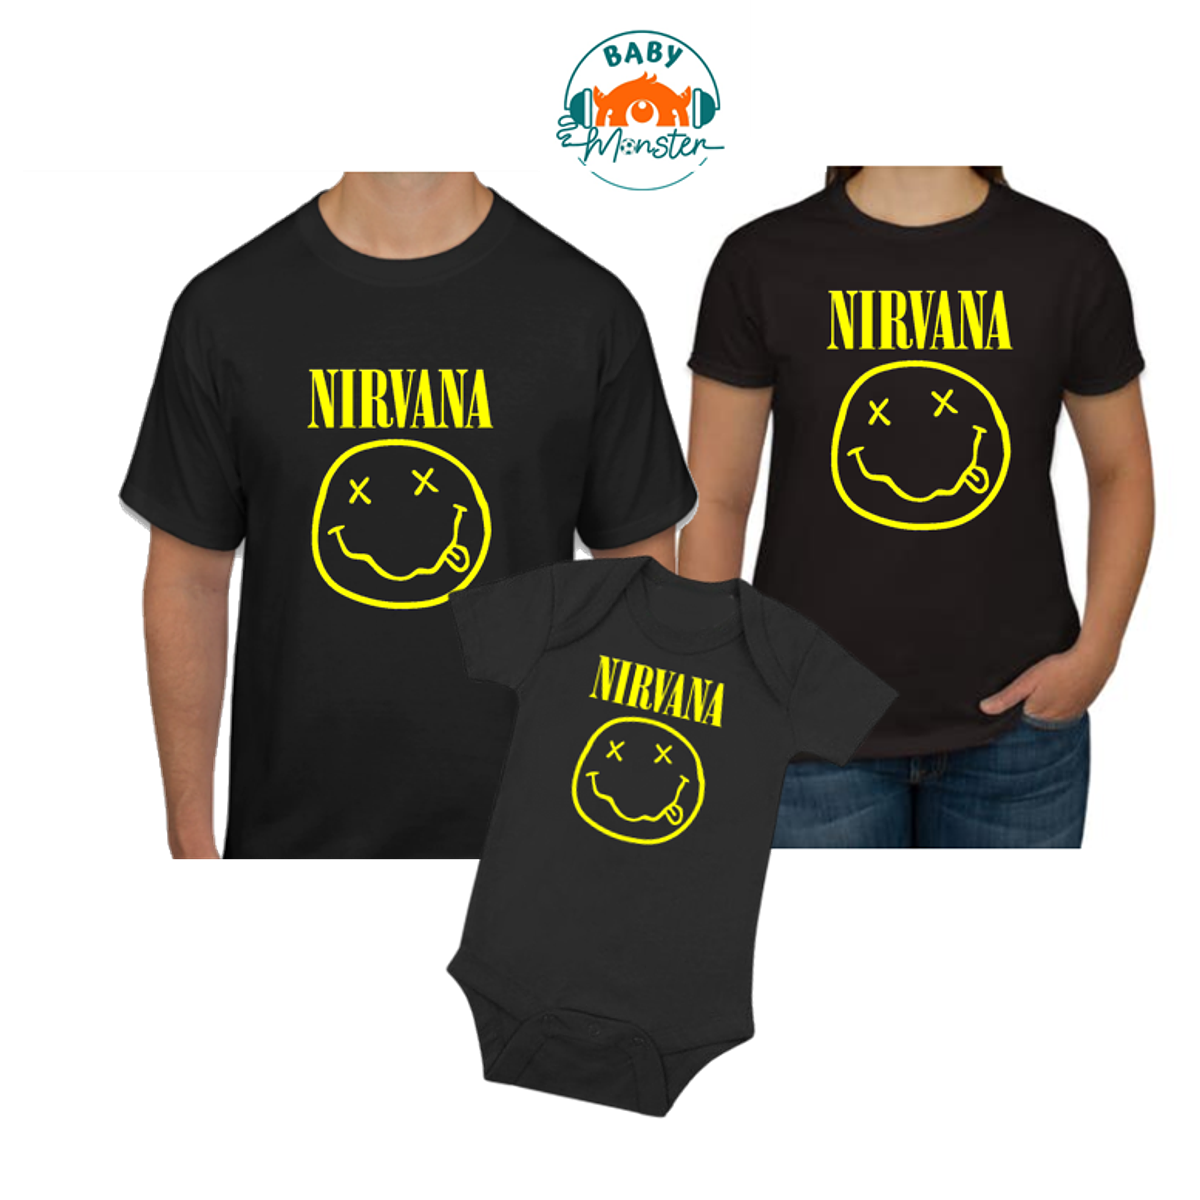 camisetas para familia Nirvana Baby Monster